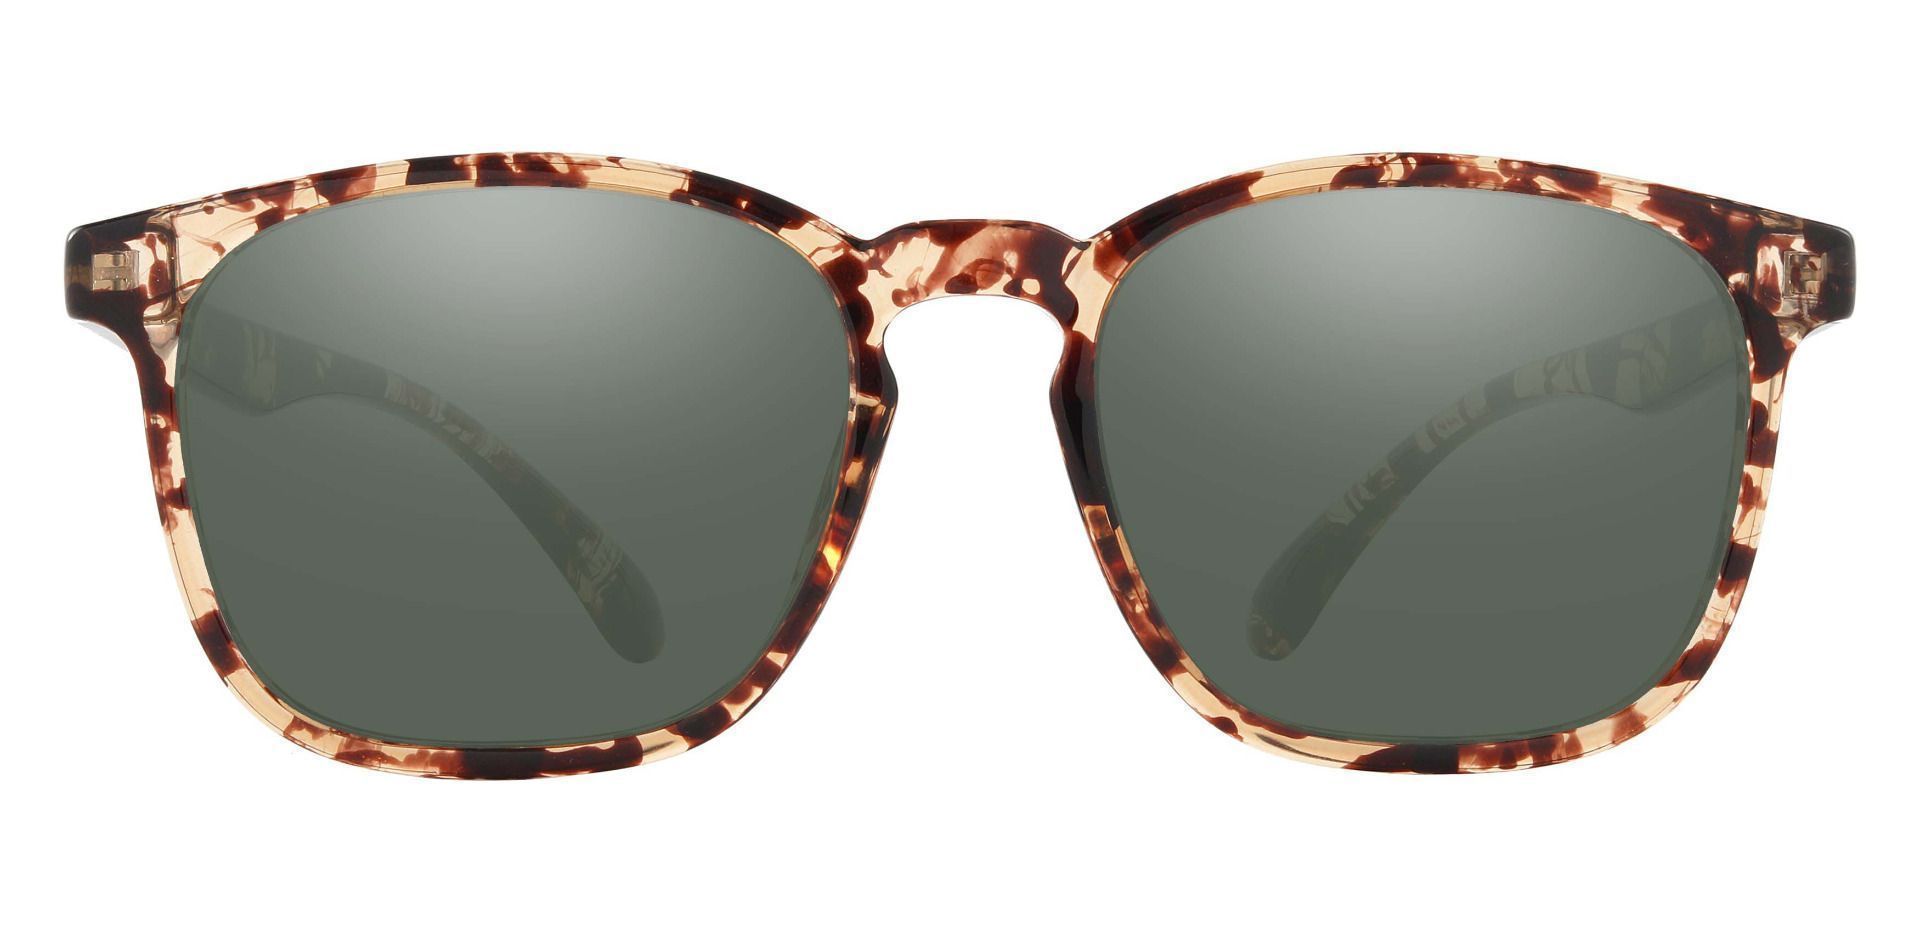 Gateway Square Reading Sunglasses - Tortoise Frame With Green Lenses